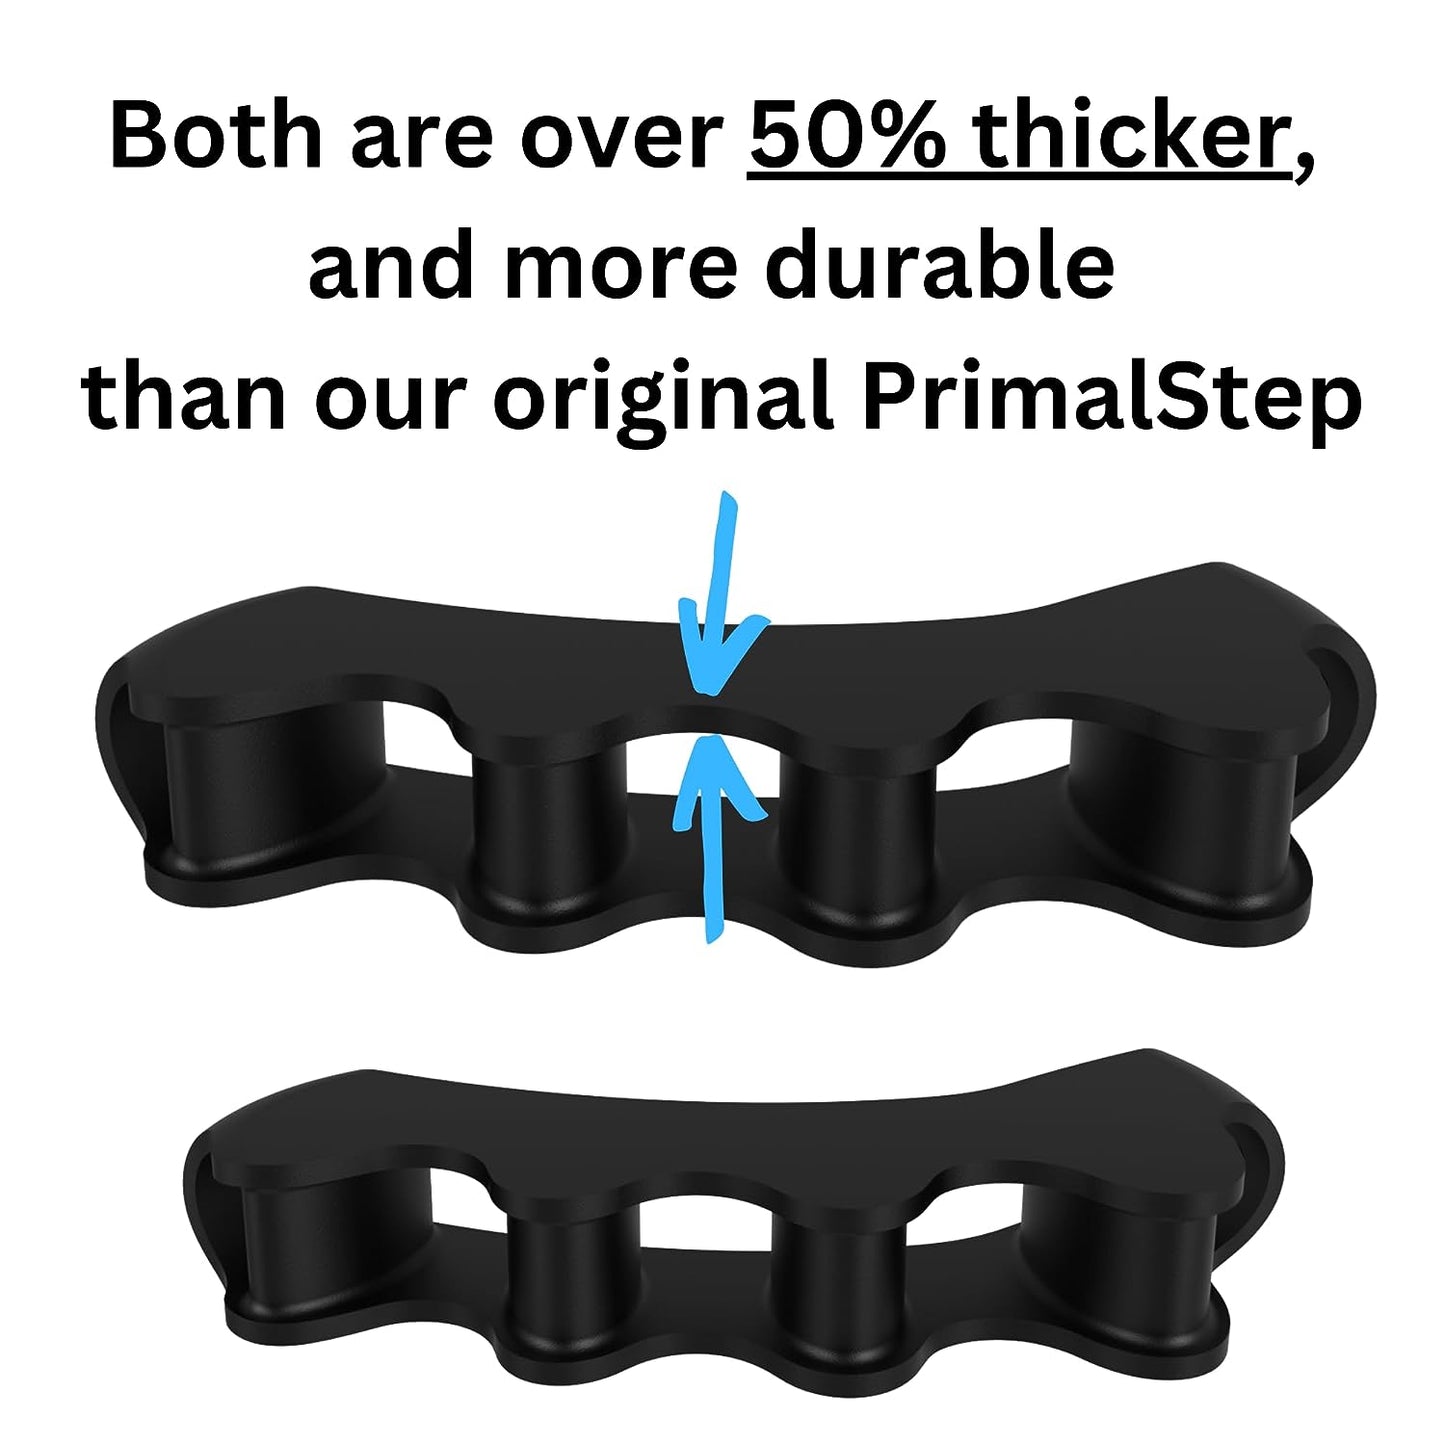 PrimalStep Fully Adjustable Toe Separators - 4 pack